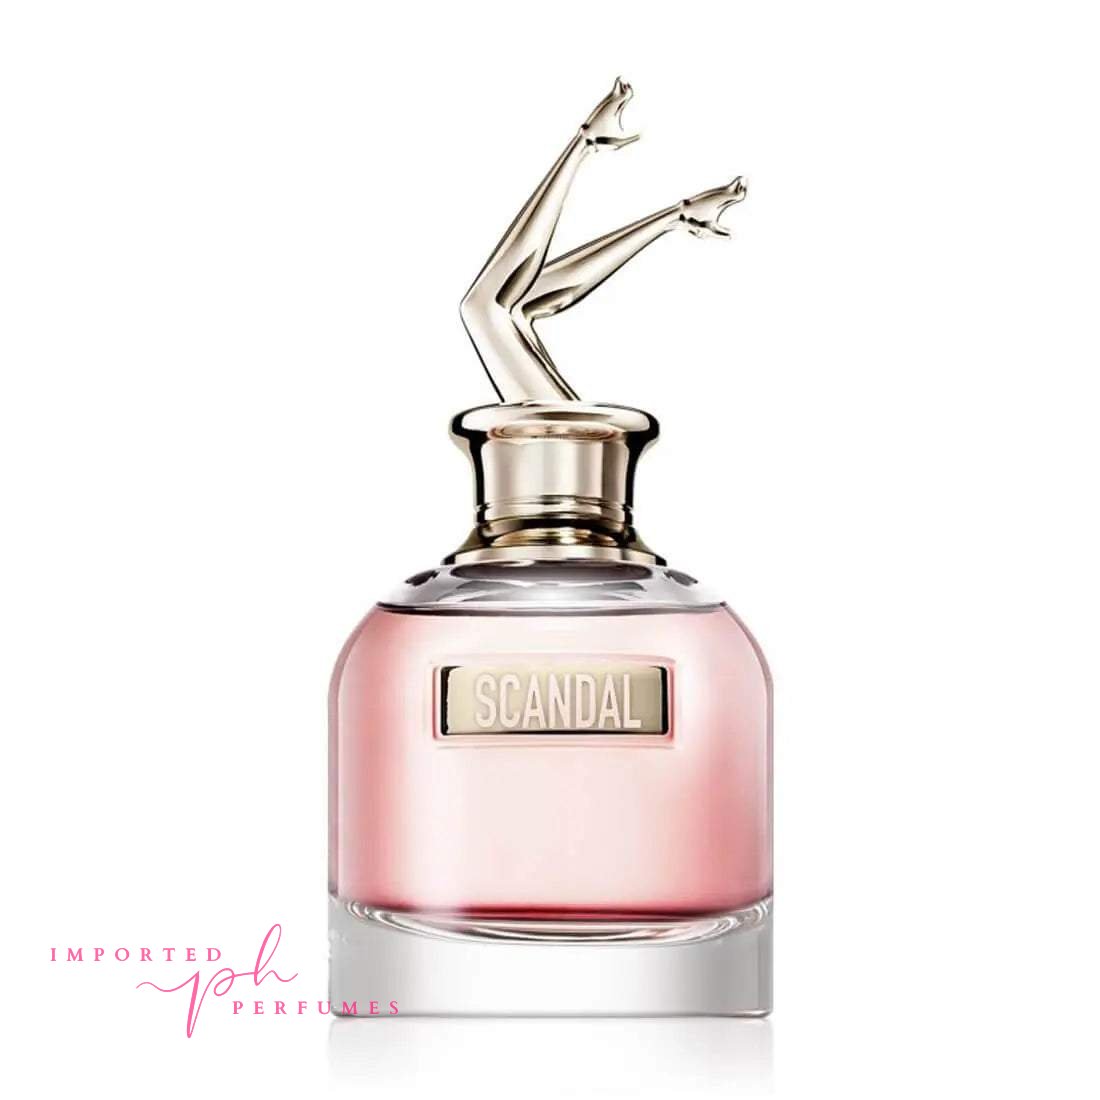 Jean Paul Gaultier Scandal for Women Eau de Parfum 80ml-Imported Perfumes Co-For Women,Jean Paul Gaultier,Jean Paul Gaultier women,Scandal,Women,Women Perfume